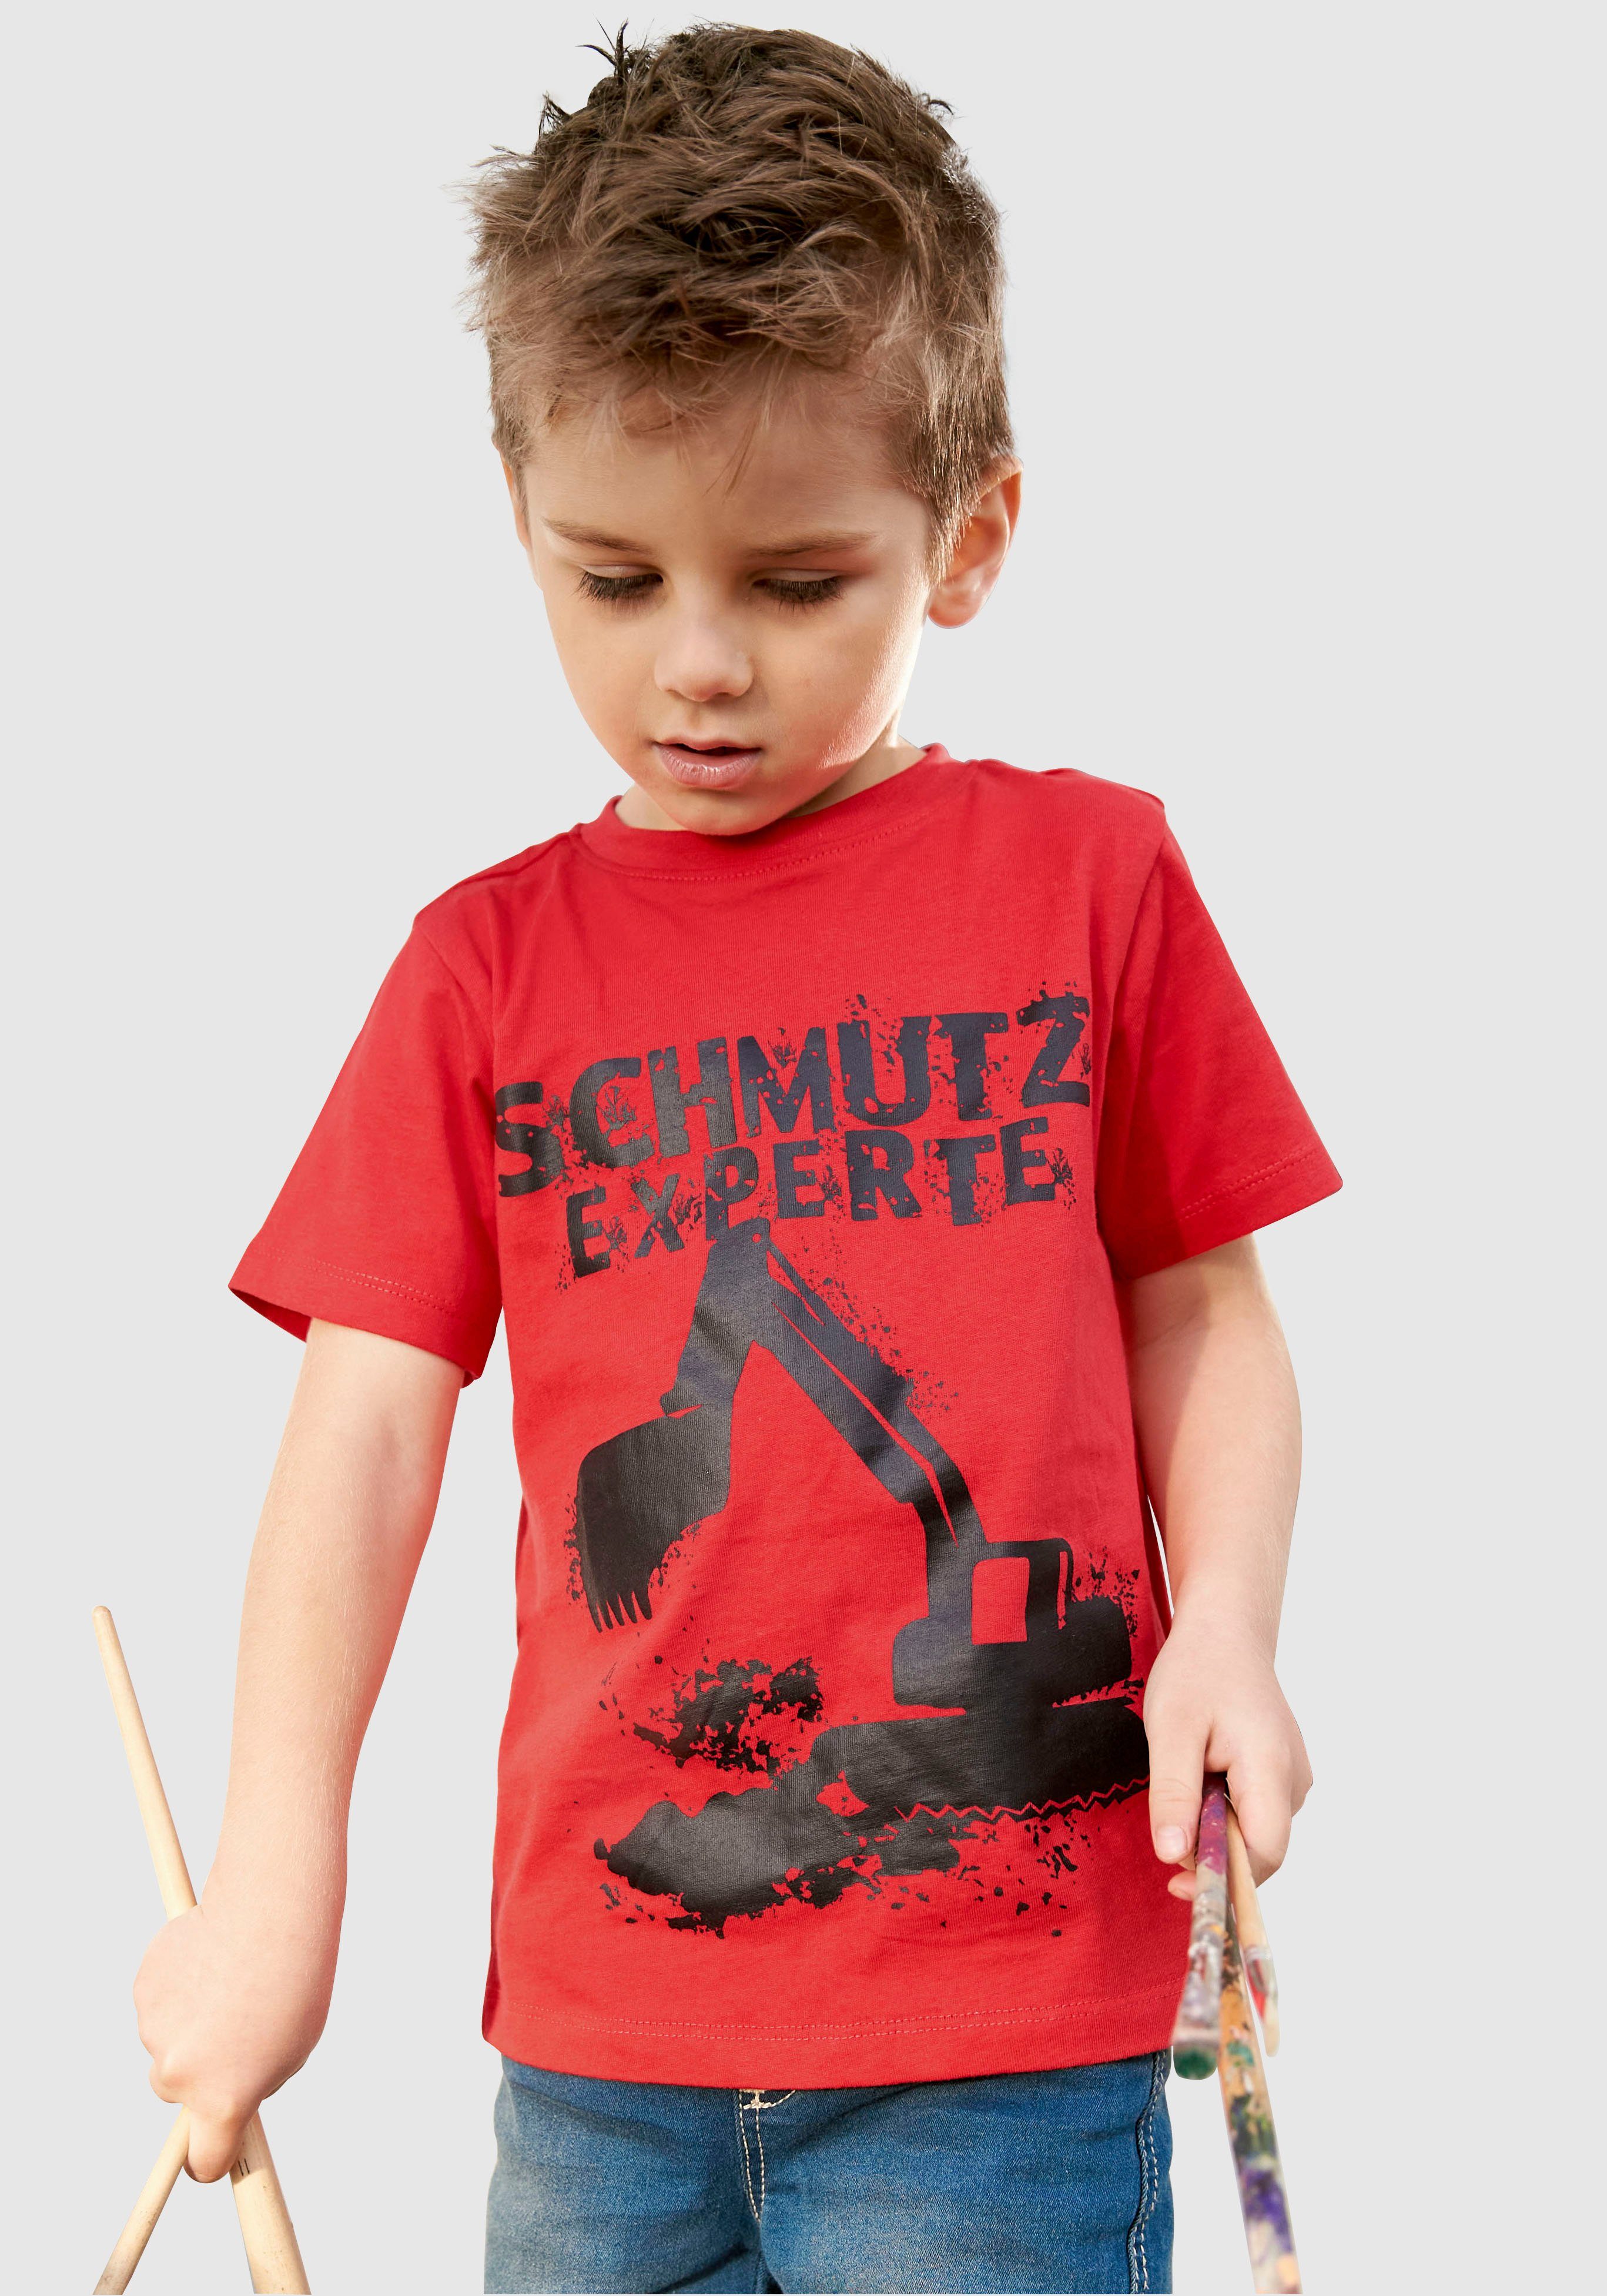 KIDSWORLD T-Shirt SCHMUTZEXPERTE